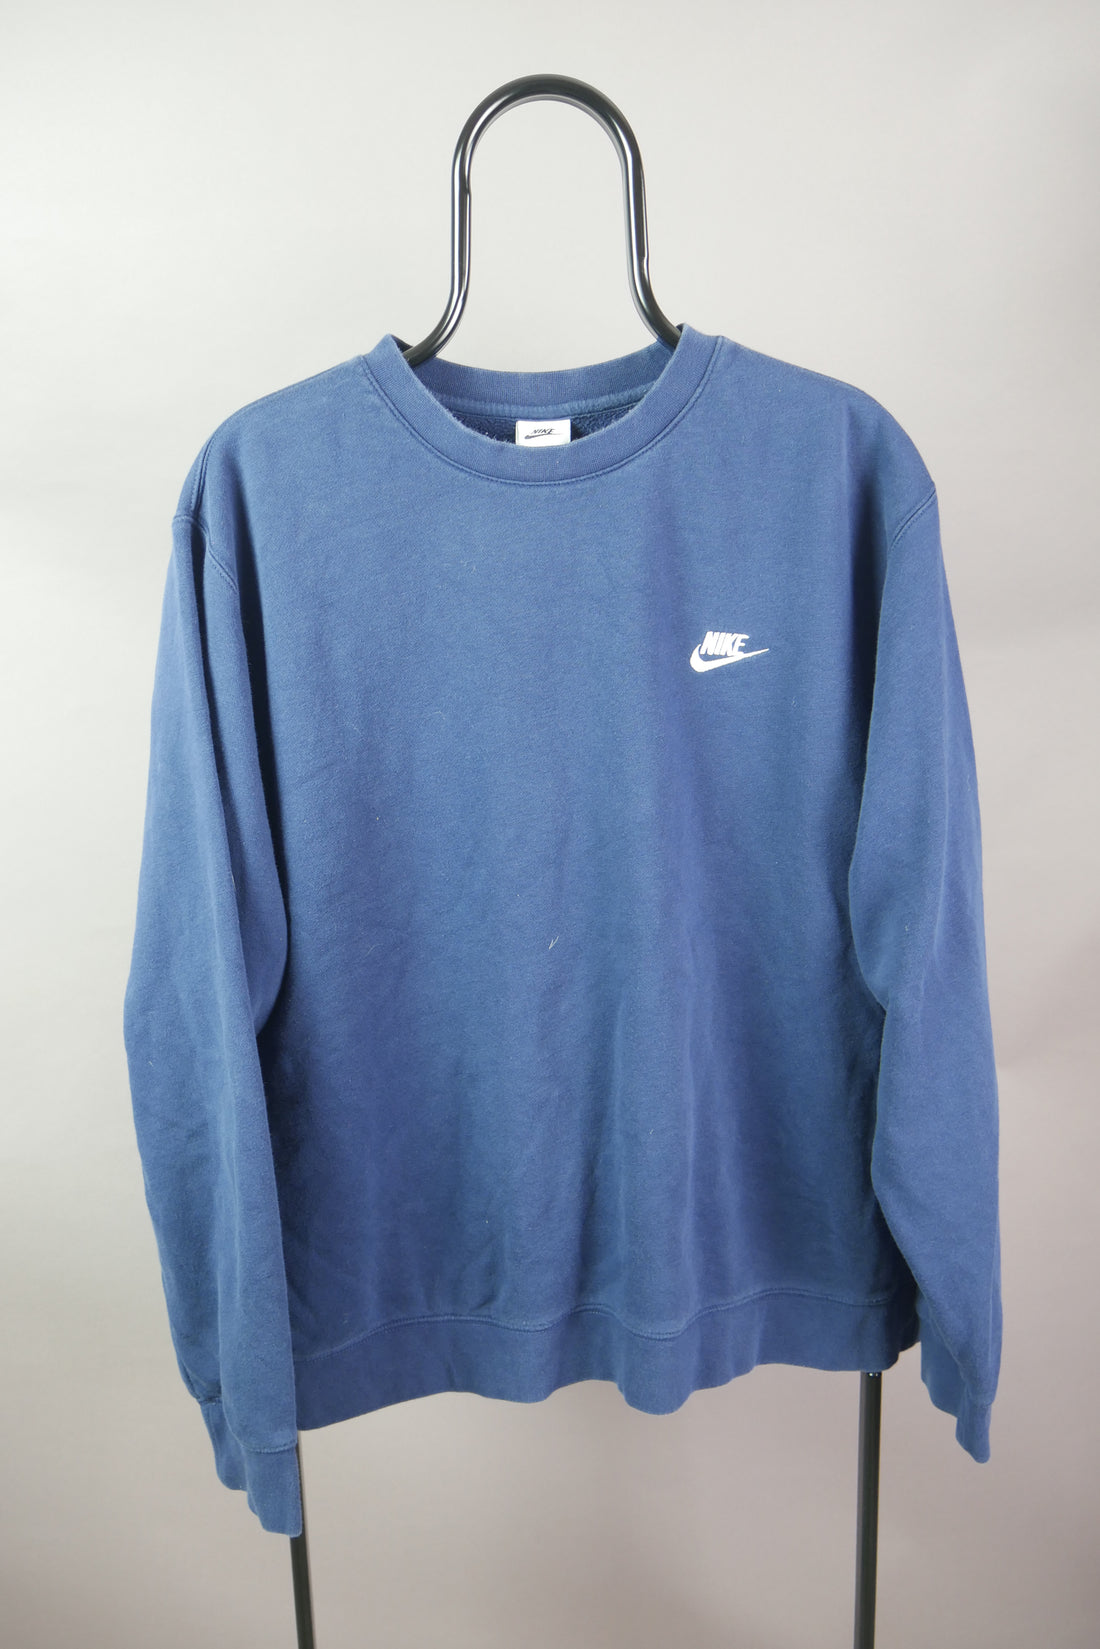 The Classic Nike Sweatshirt (XL)